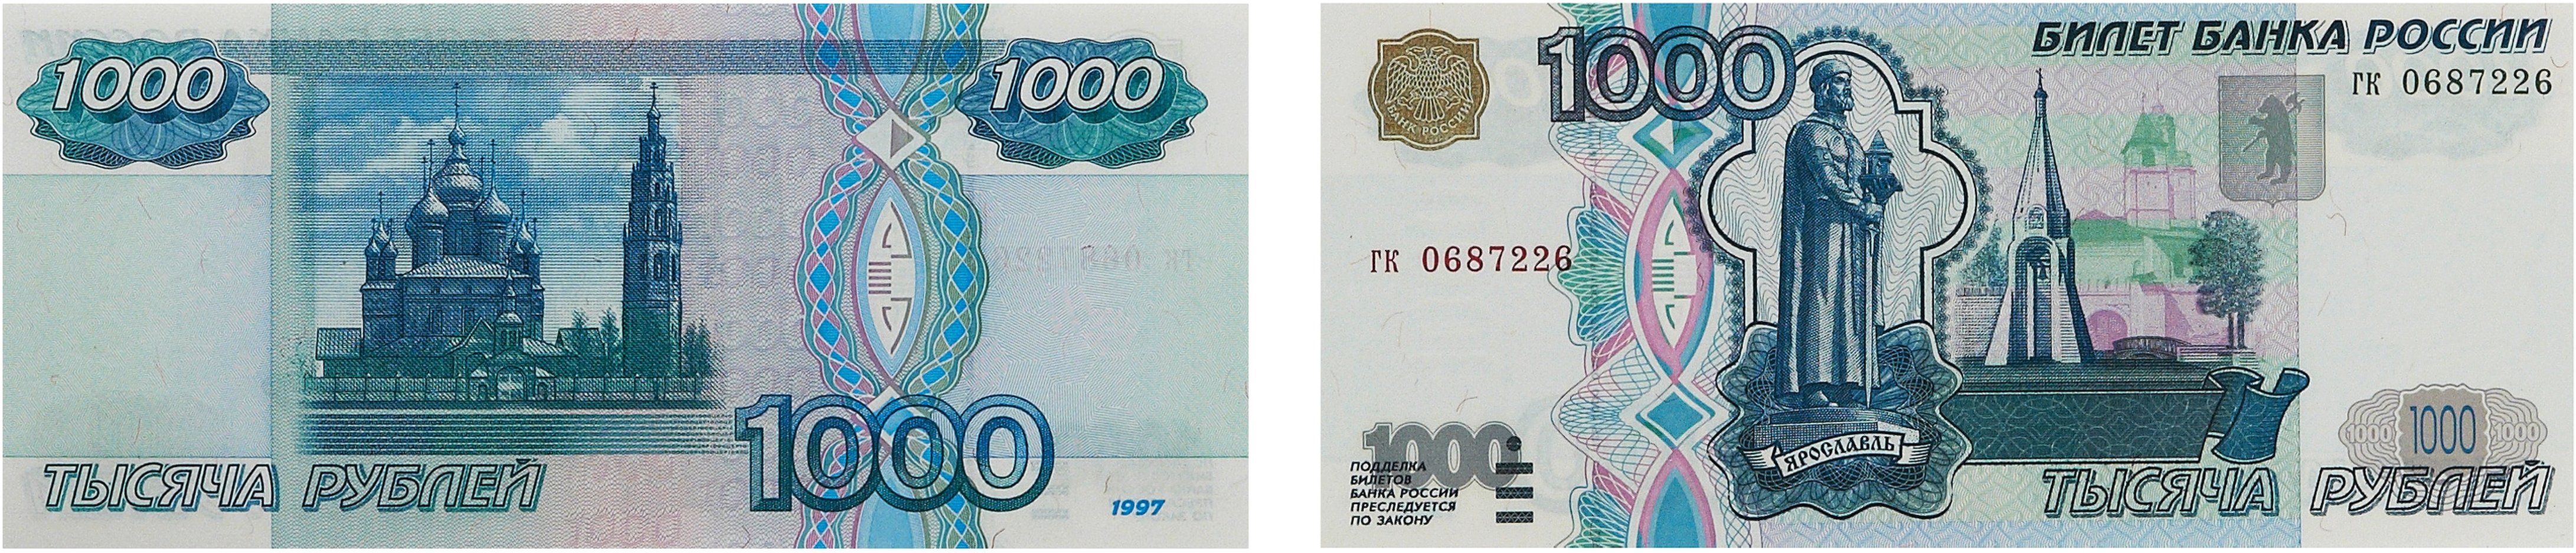 Купюра 1.000 руб. Купюра 1000. Купюра 1000 рублей. Банкнота 1000 рублей. Купюра 1 тысяча.